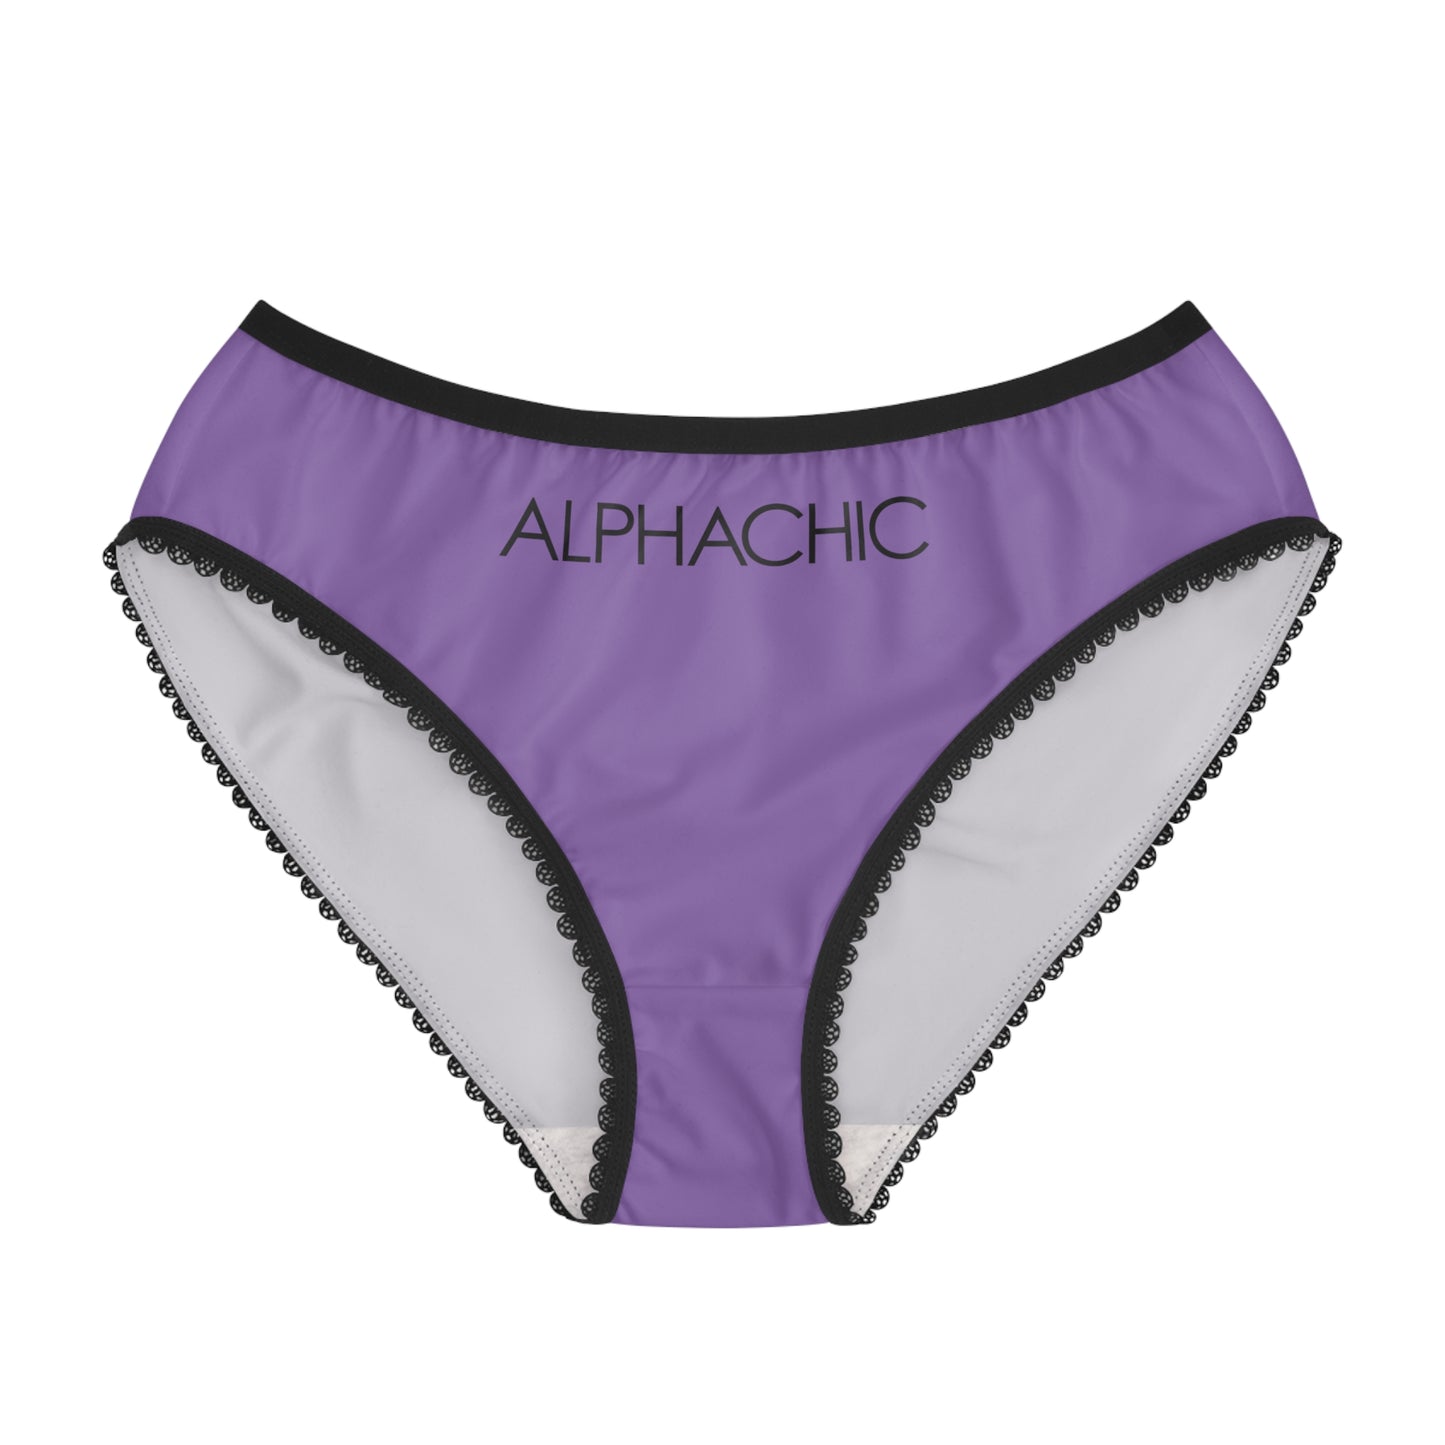 AlphaChic Briefs - Light Purple